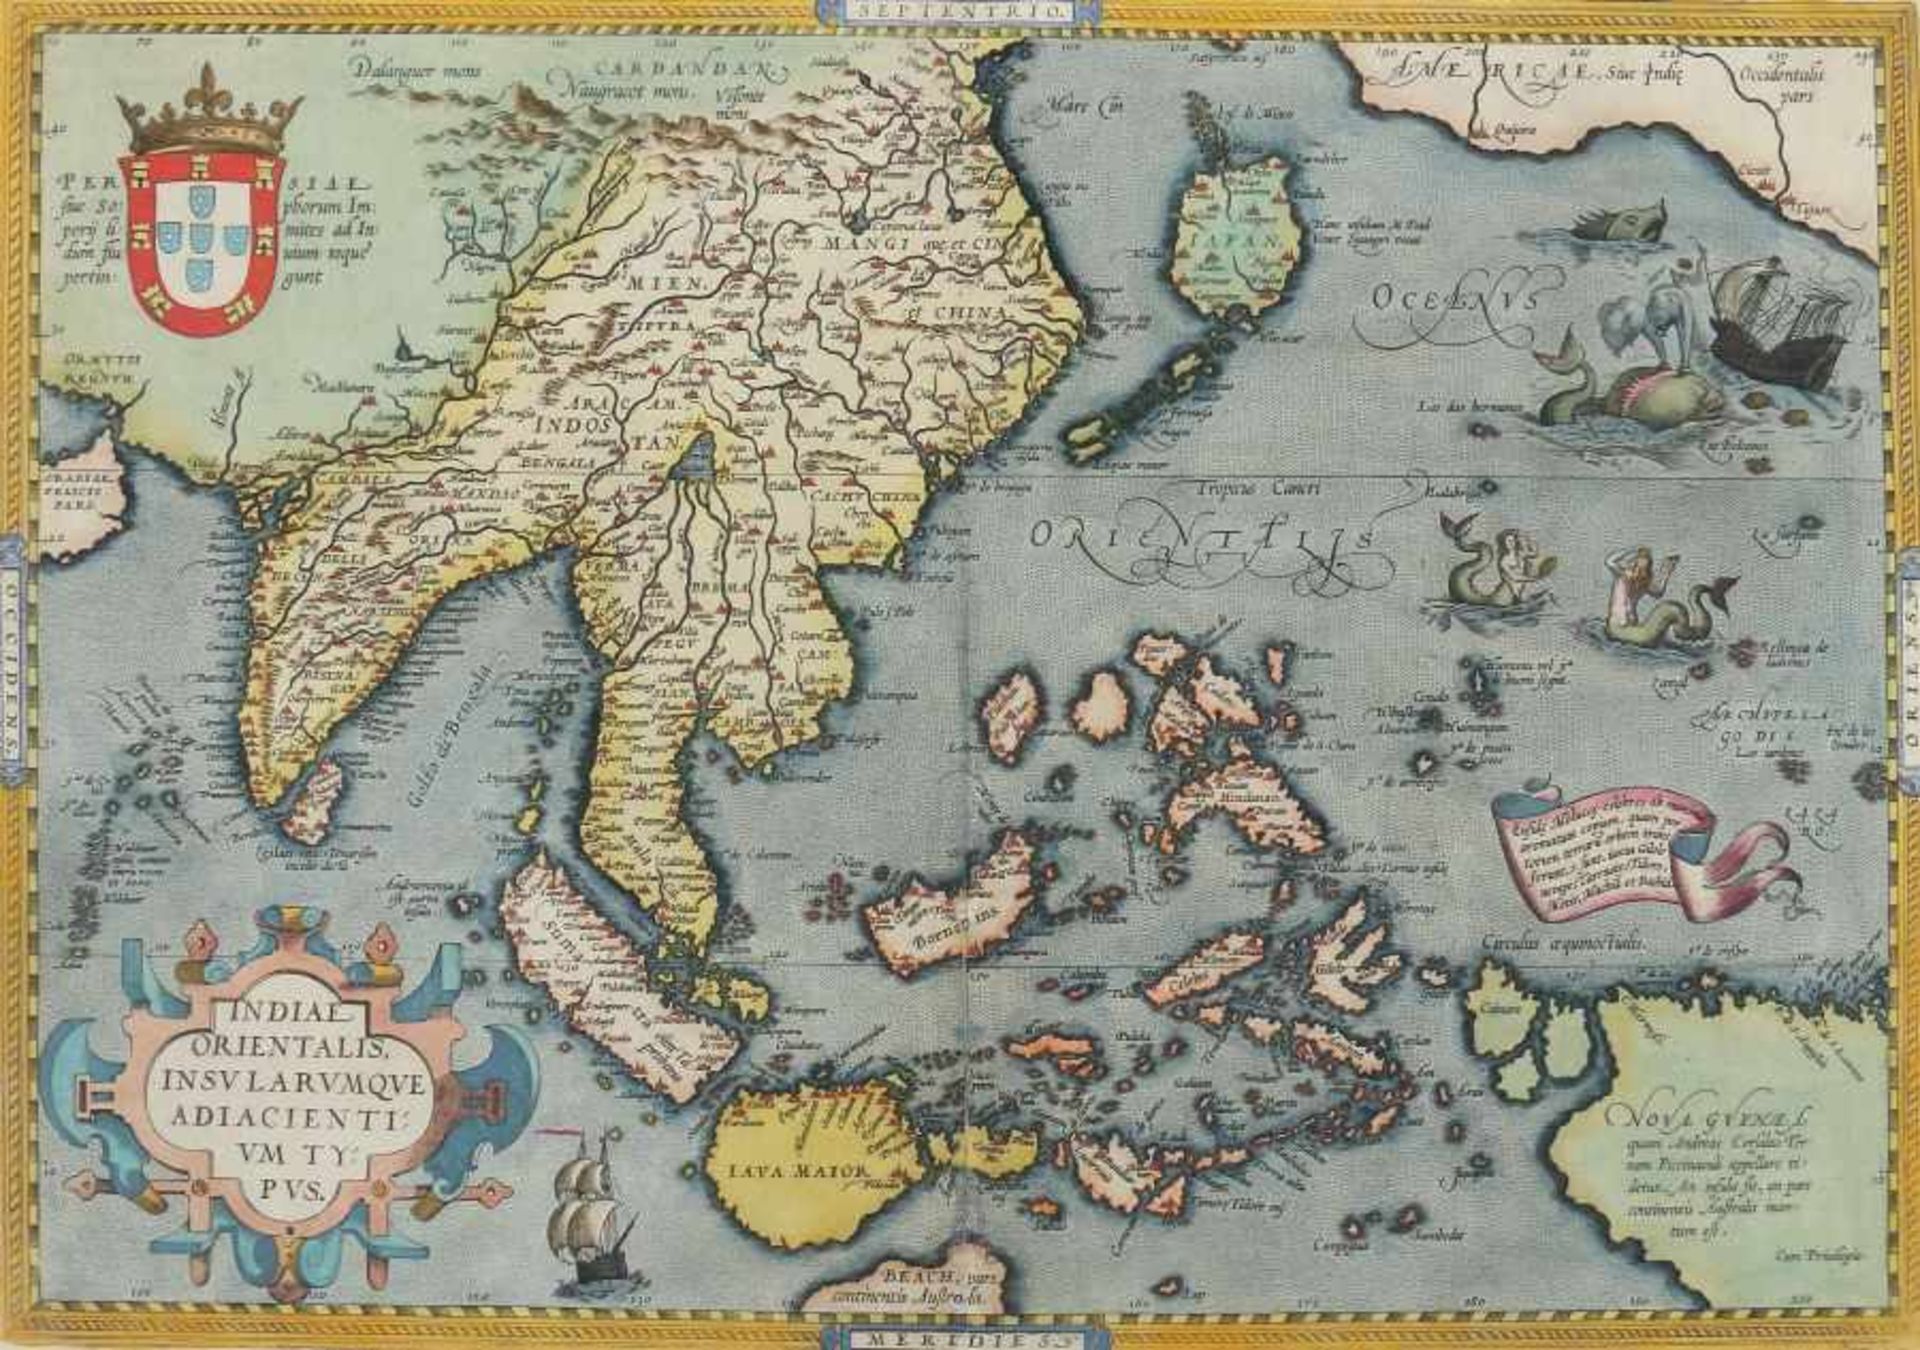 Ortelius, Abraham Antwerpen 1527 - 1598 ebenda, Kartograph und Geograph. "Indiae Orientalis